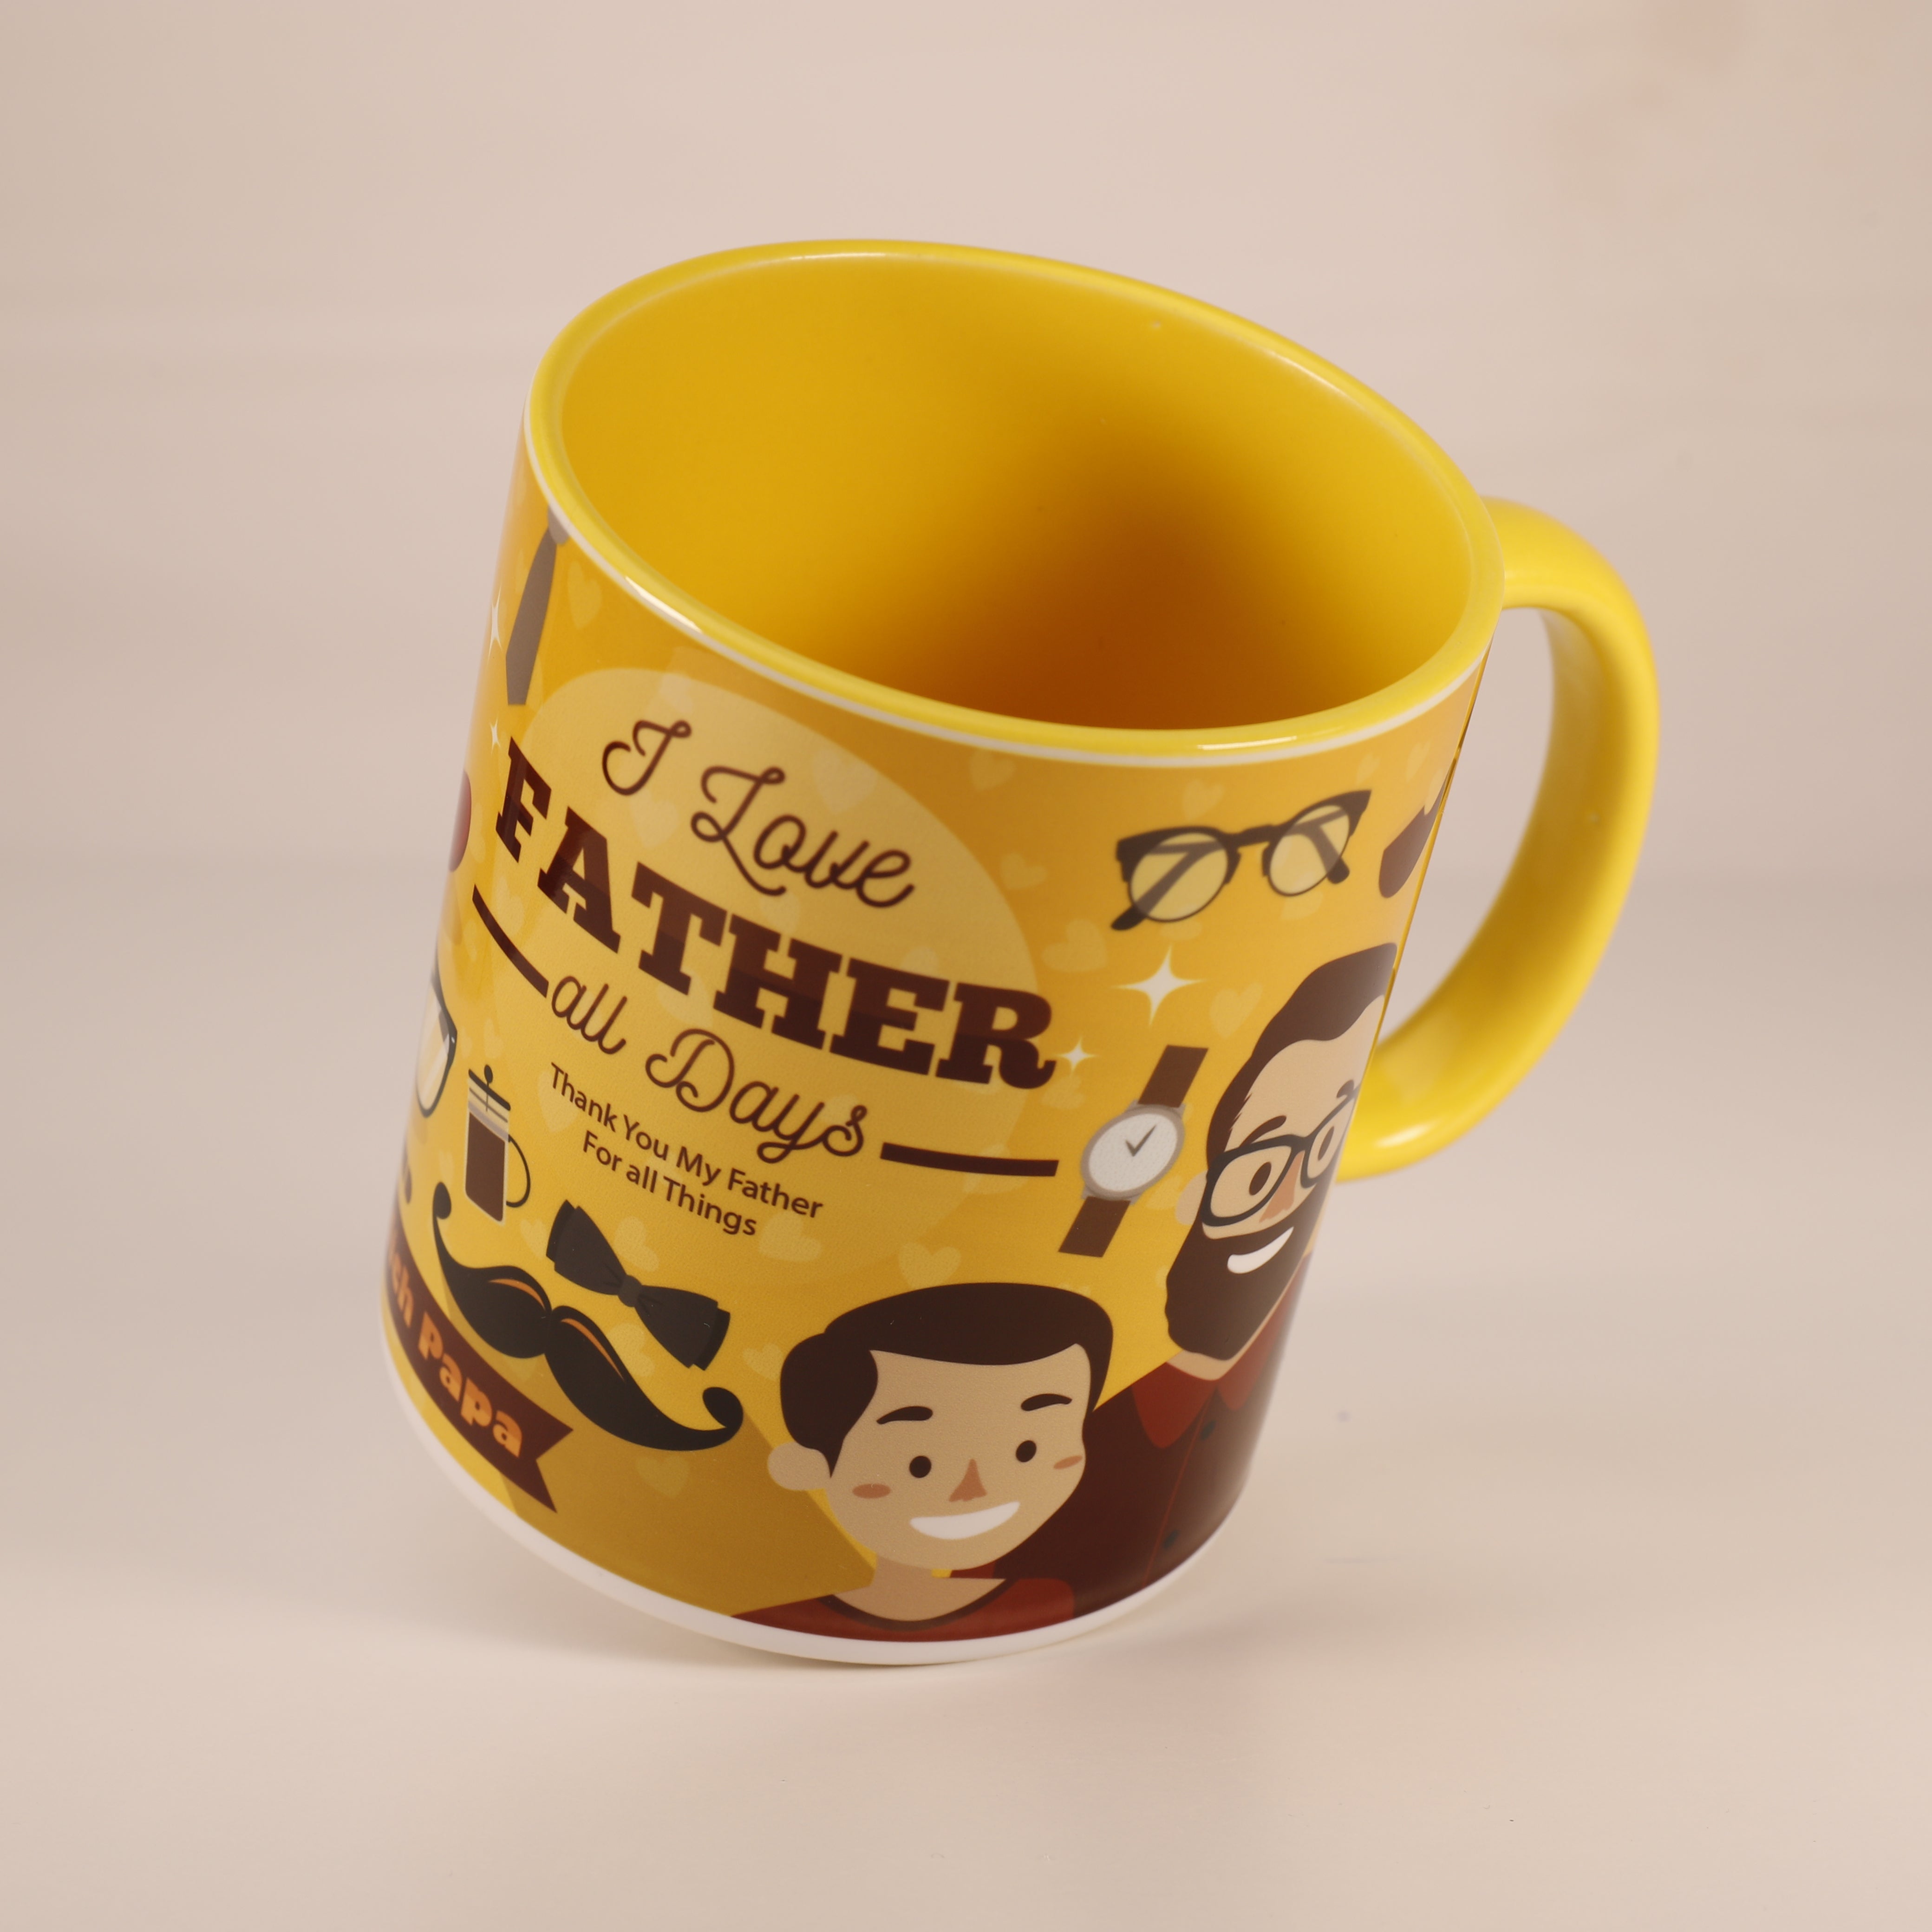 Vater Tassen, Tassendruck, Tasse mit Vater Motiv, Father, Keramik Kaffeetasse 300 ml